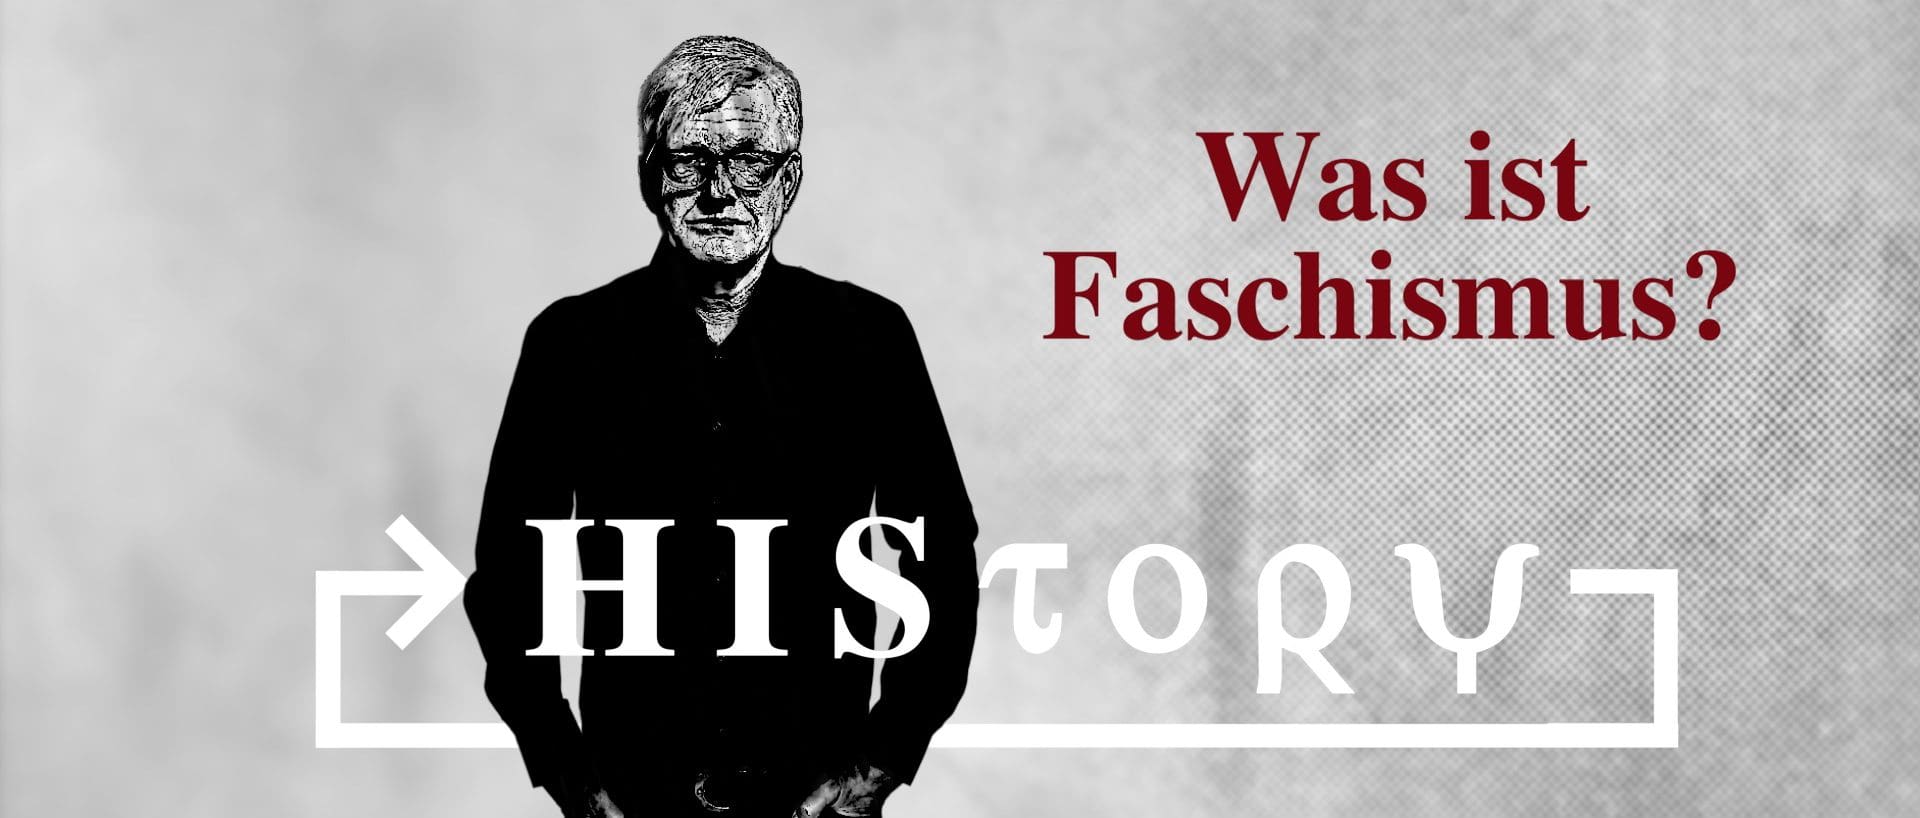 history-was-ist-faschismus